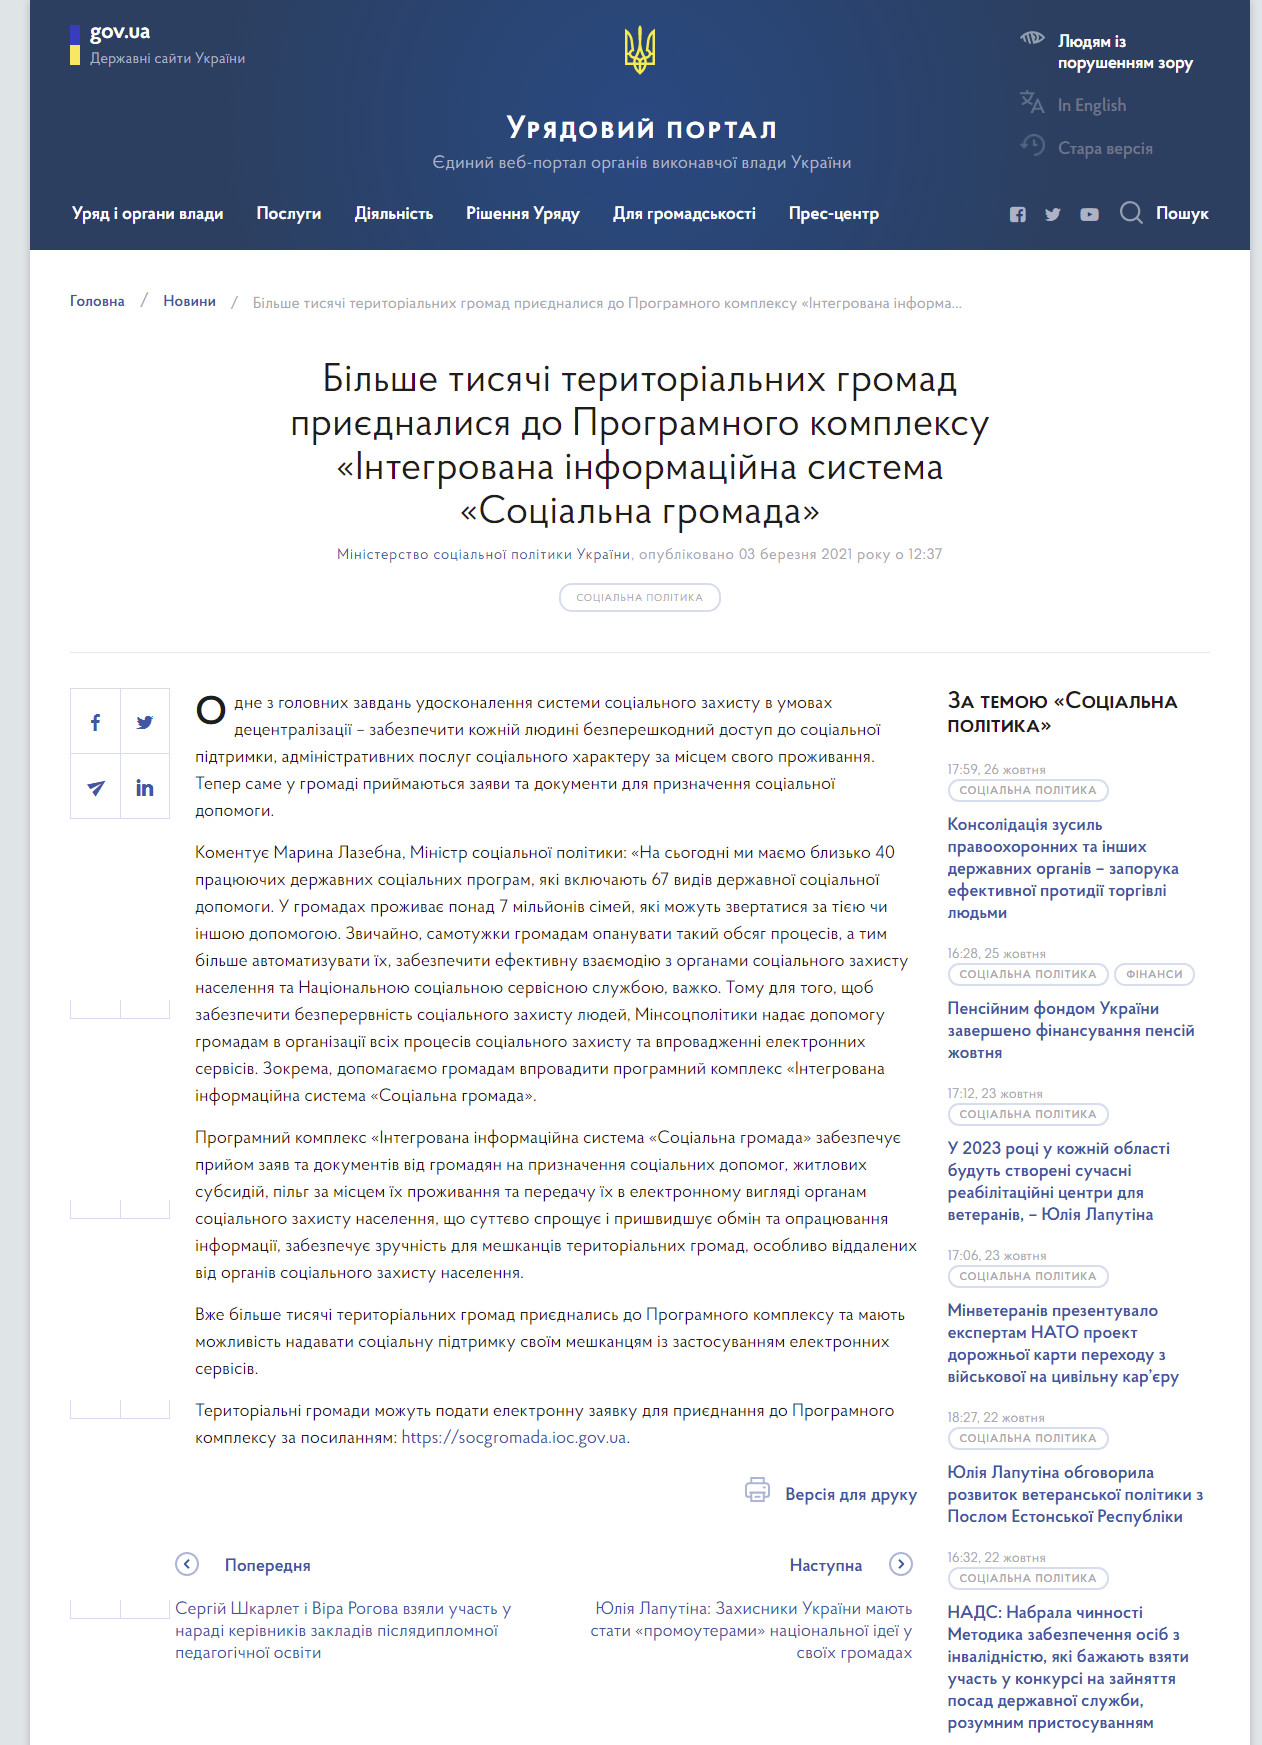 https://www.kmu.gov.ua/news/bilshe-tisyachi-teritorialnih-gromad-priyednalisya-do-programnogo-kompleksu-integrovana-informacijna-sistema-socialna-gromada